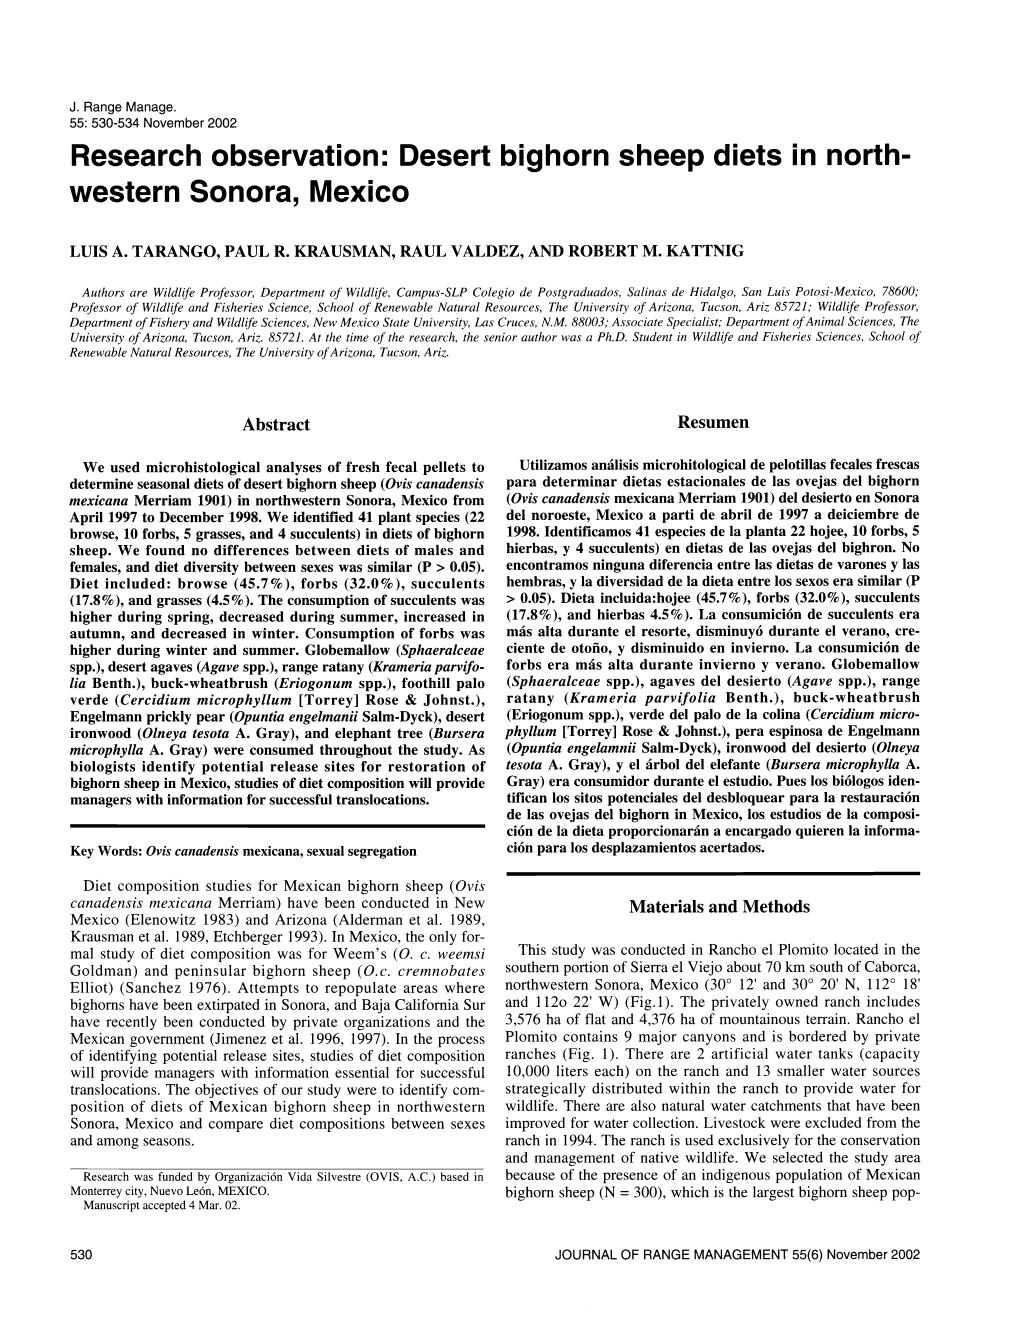 Desert Bighorn Sheep Diets in North- Western Sonora, Mexico